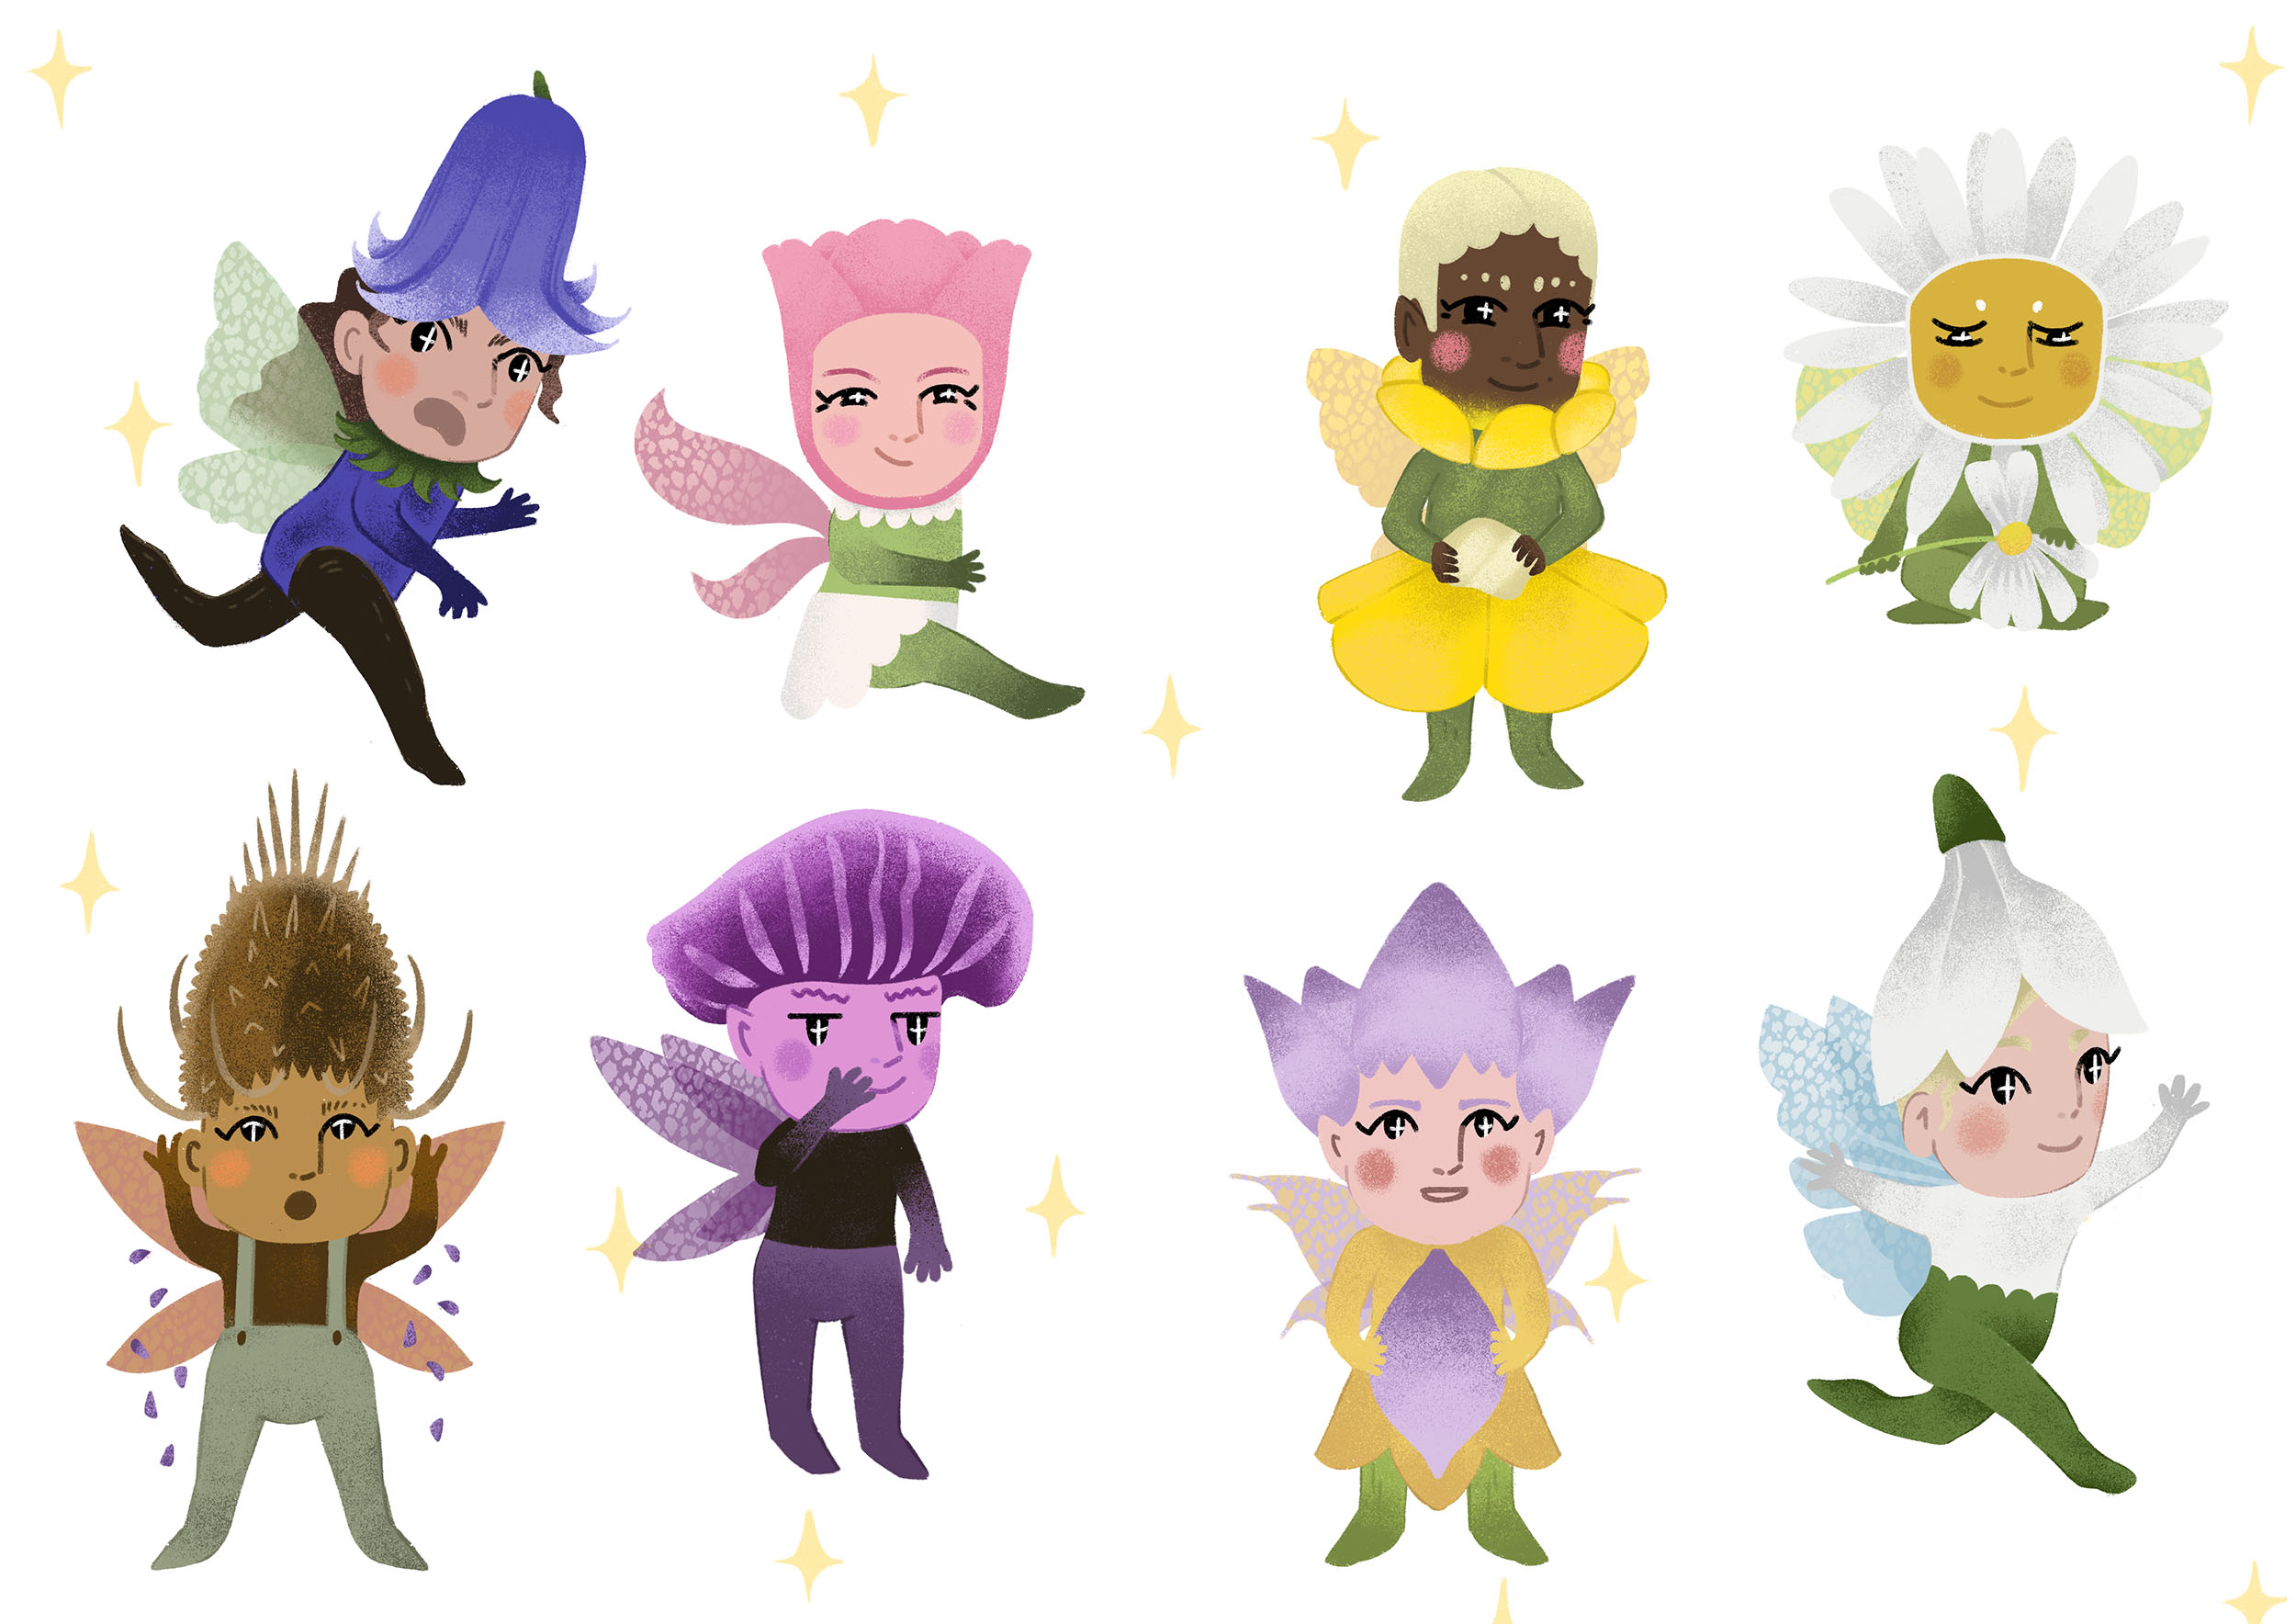 Character Designs of fairies each representing their flower and season.